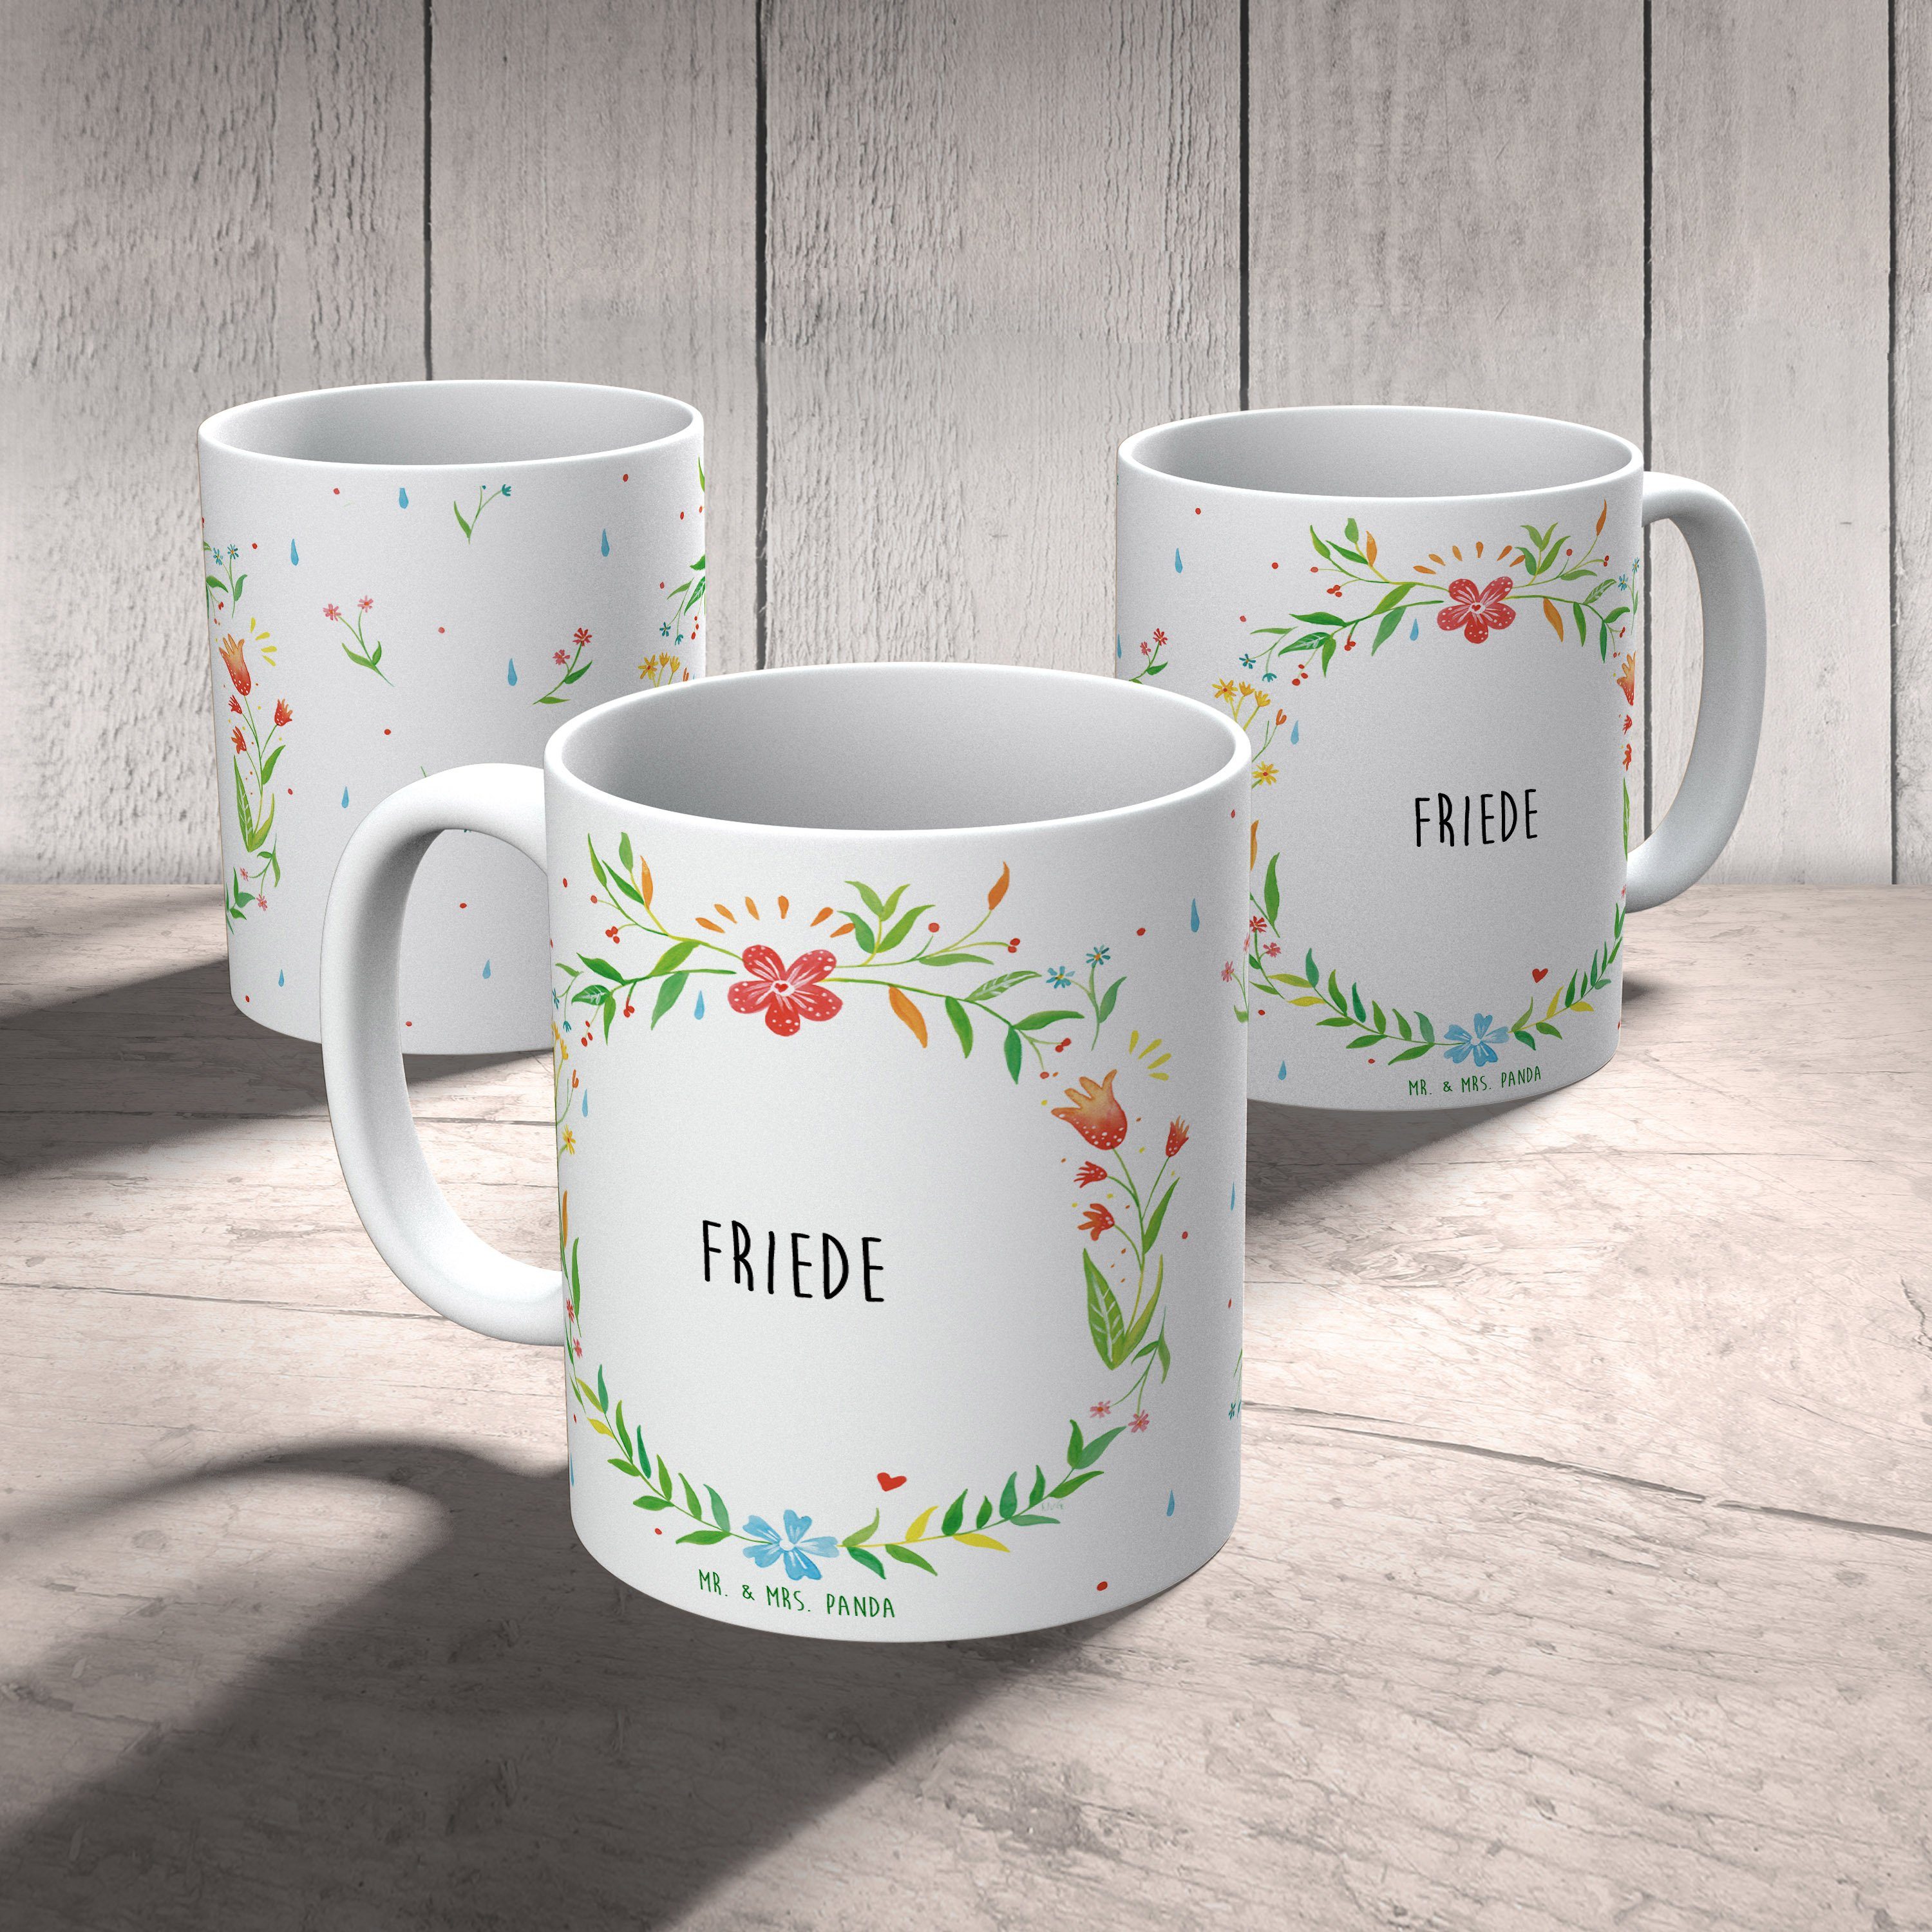 Mr. & Mrs. Panda - Kaffeetasse, Tasse, Tasse Geschenk Mot, Tasse, Büro Keramik Geschenk, Friede Tasse